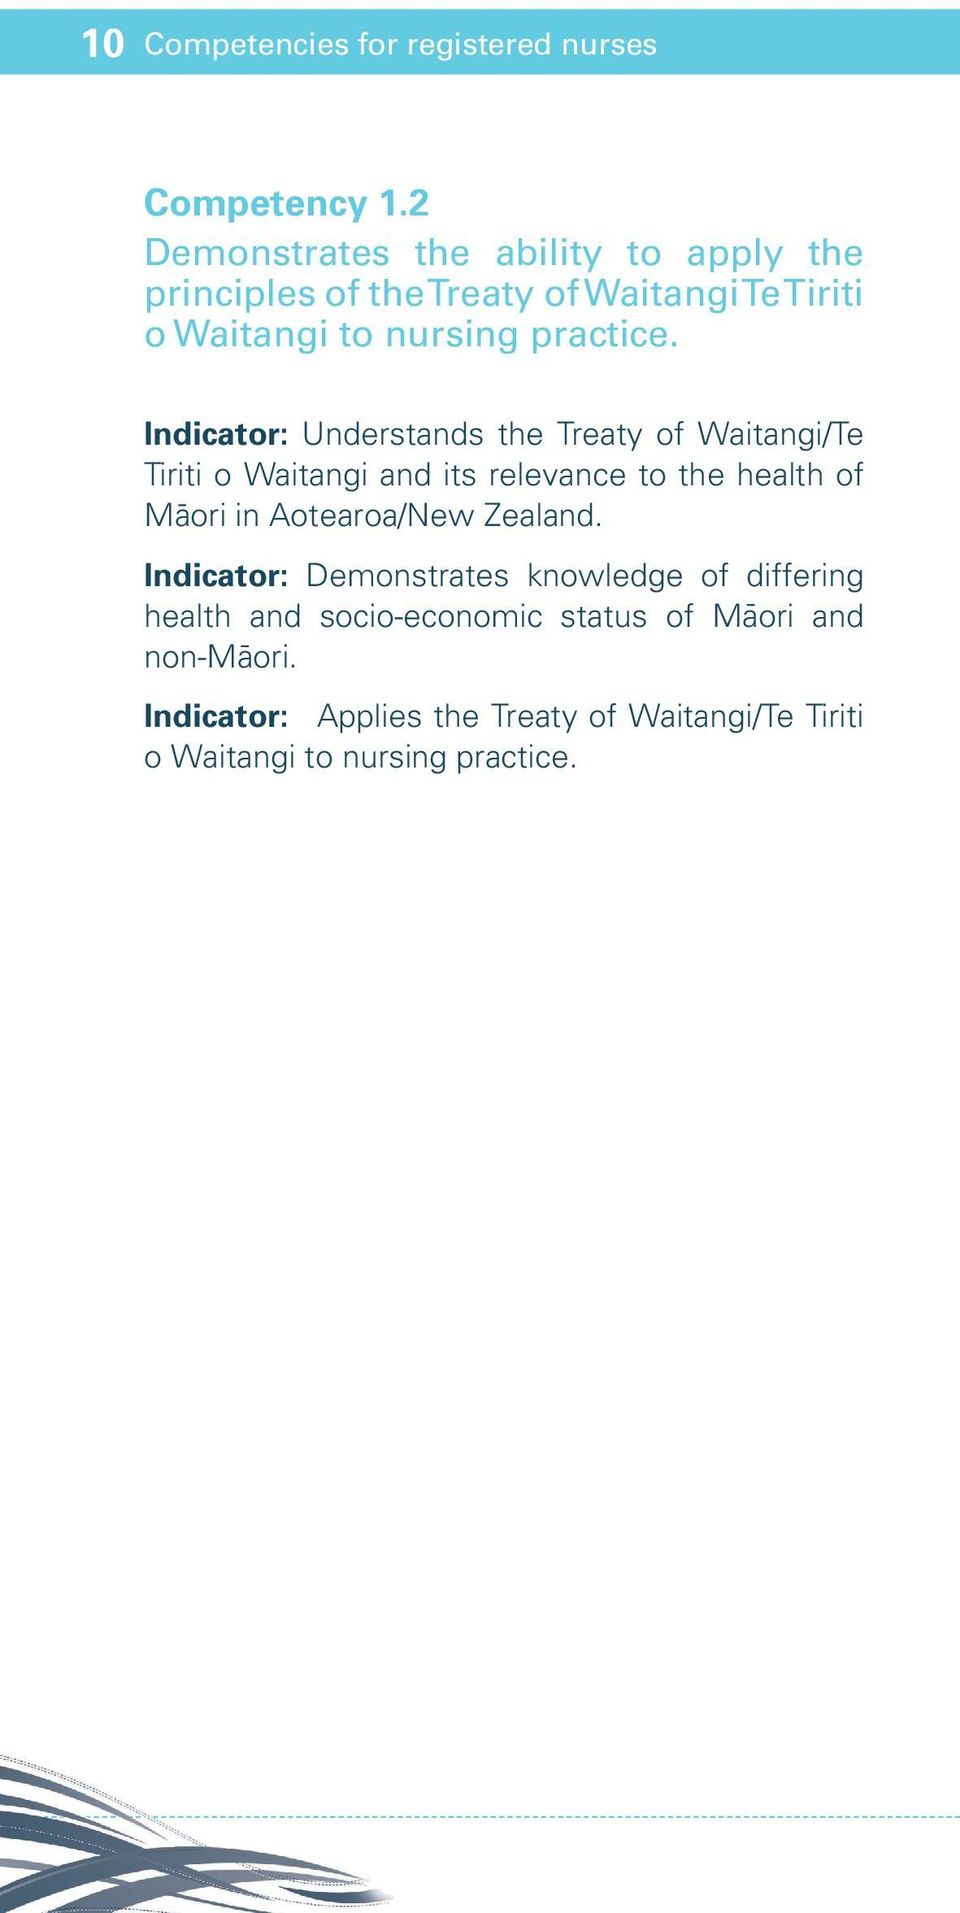 Indicator: Understands the Treaty of Waitangi/Te Tiriti o Waitangi and its relevance to the health of Maori in